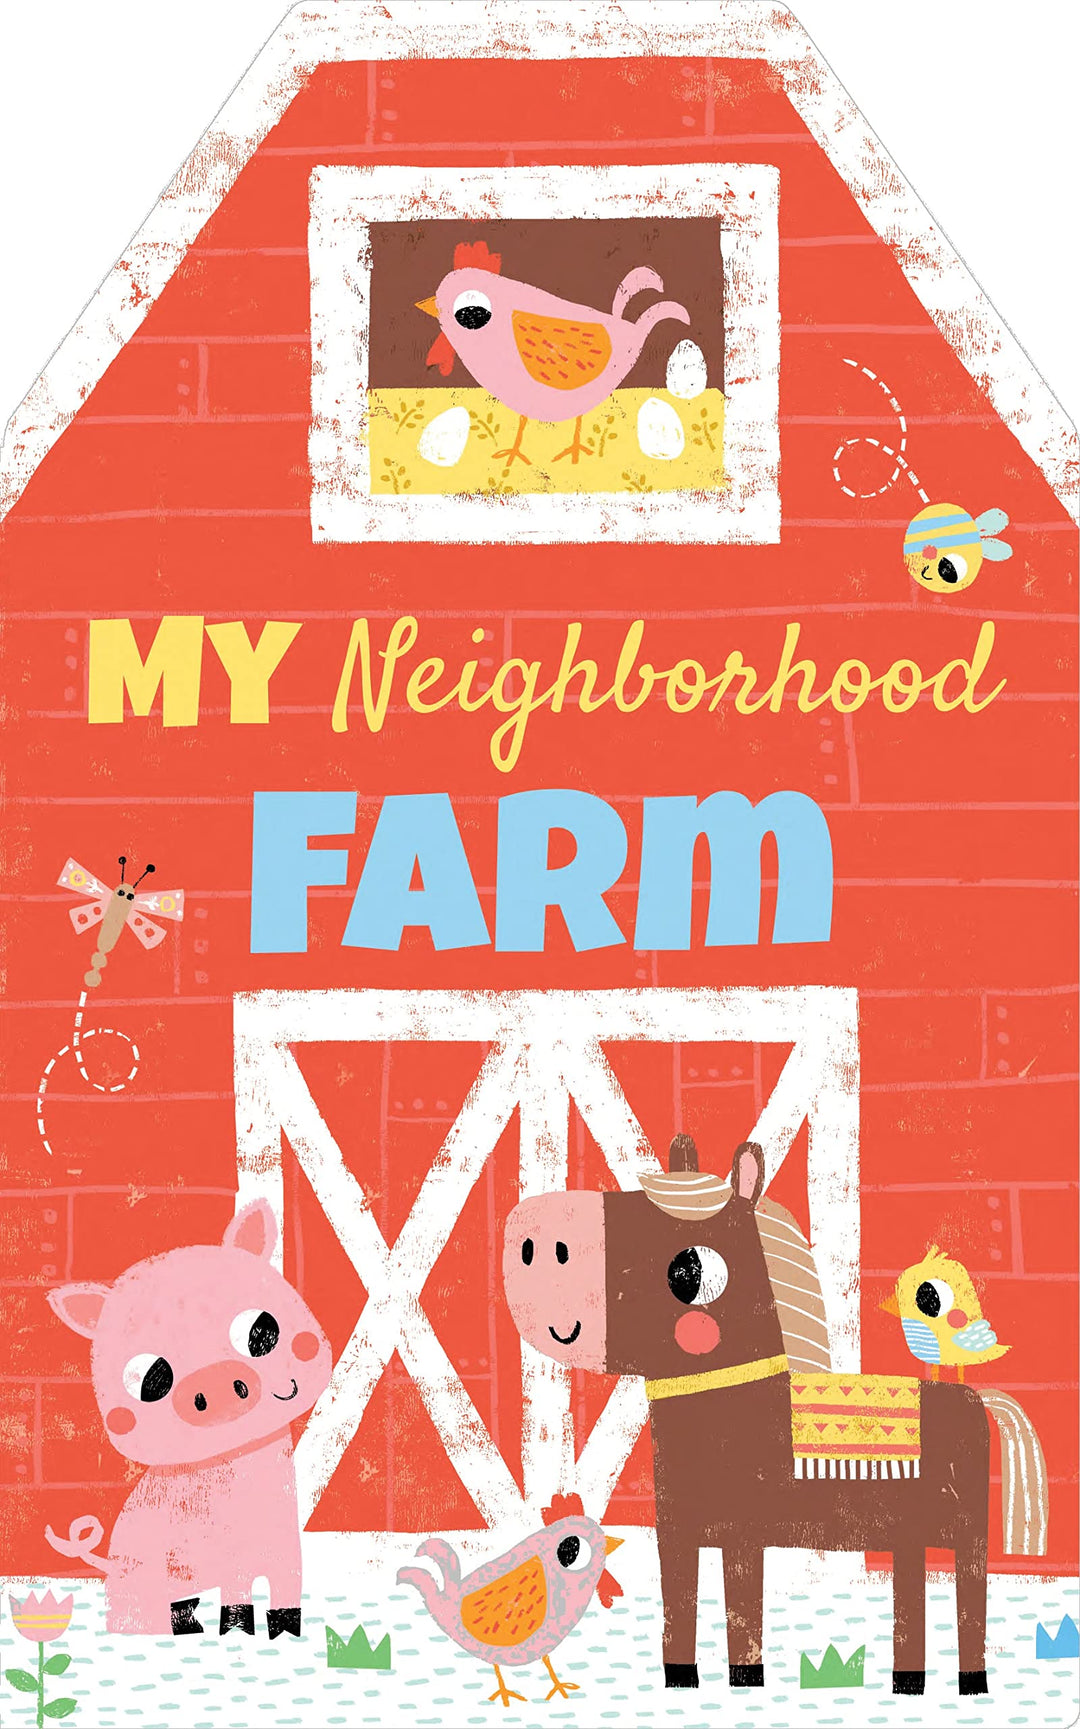 My Neighborhood Farm